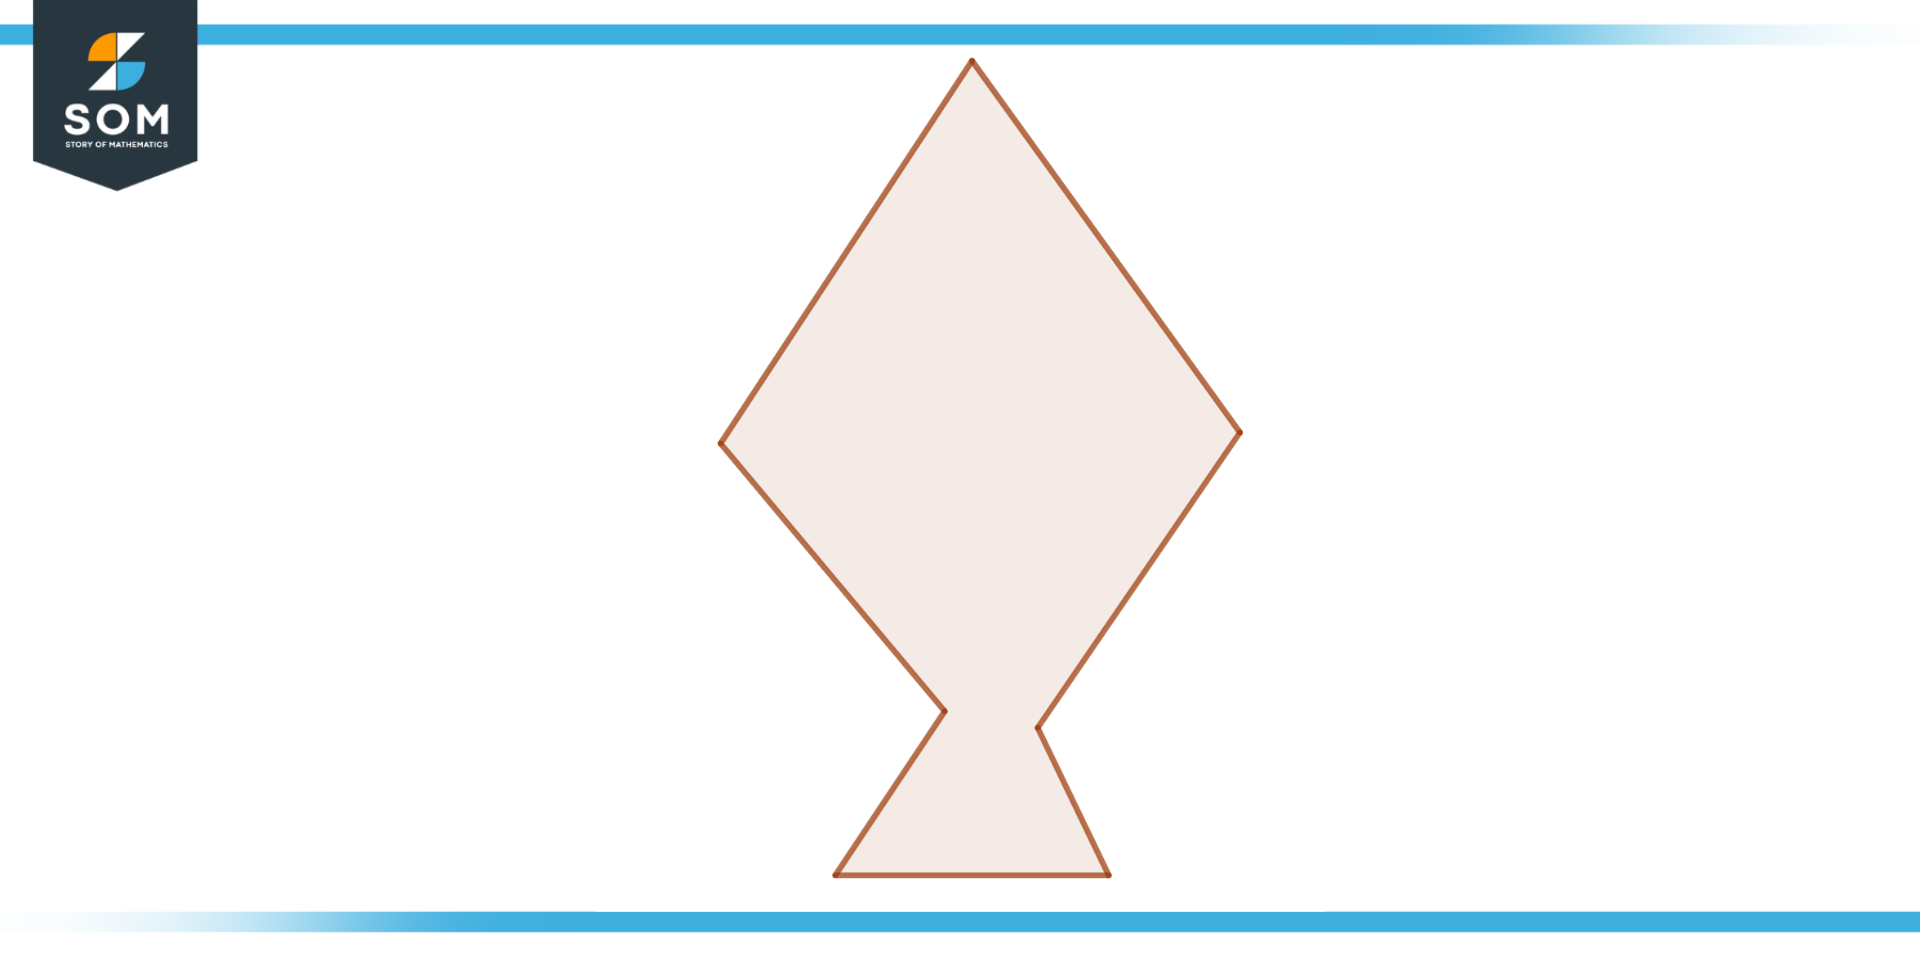 A simple irregular Polygon